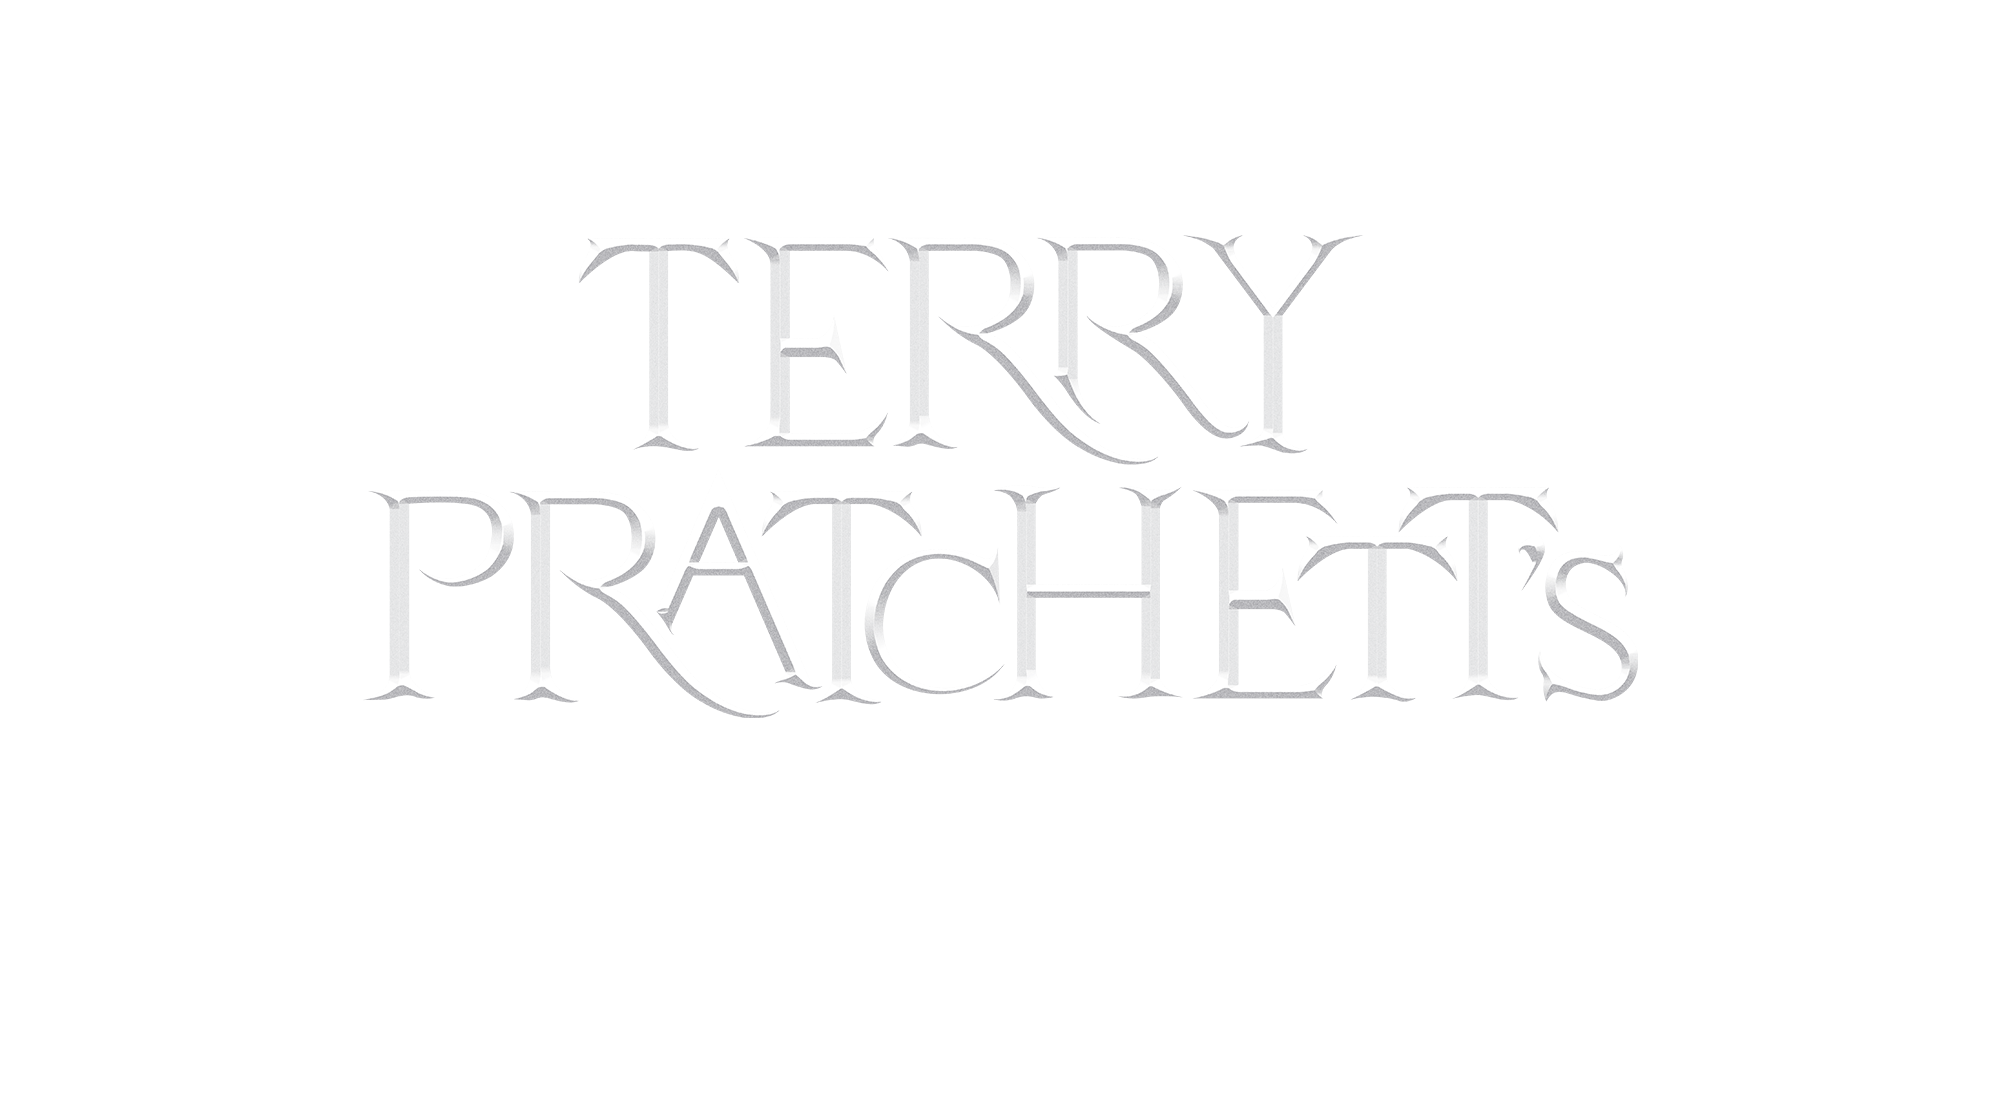 Terry Pratchett's Discworld in Audio logo